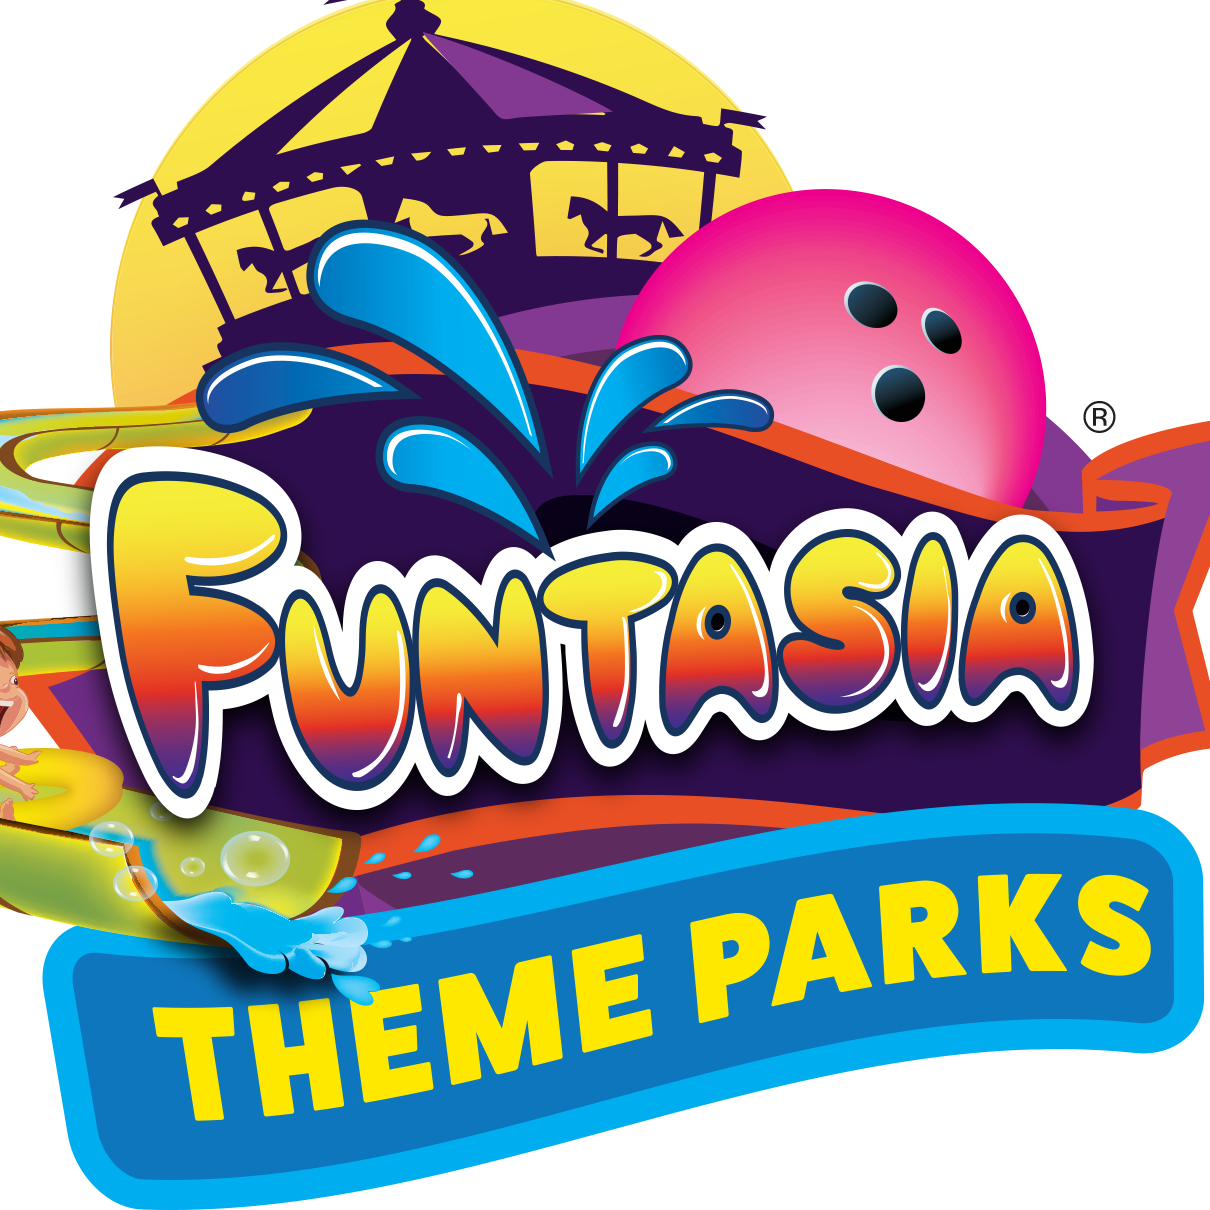 Funtasia Waterpark logo